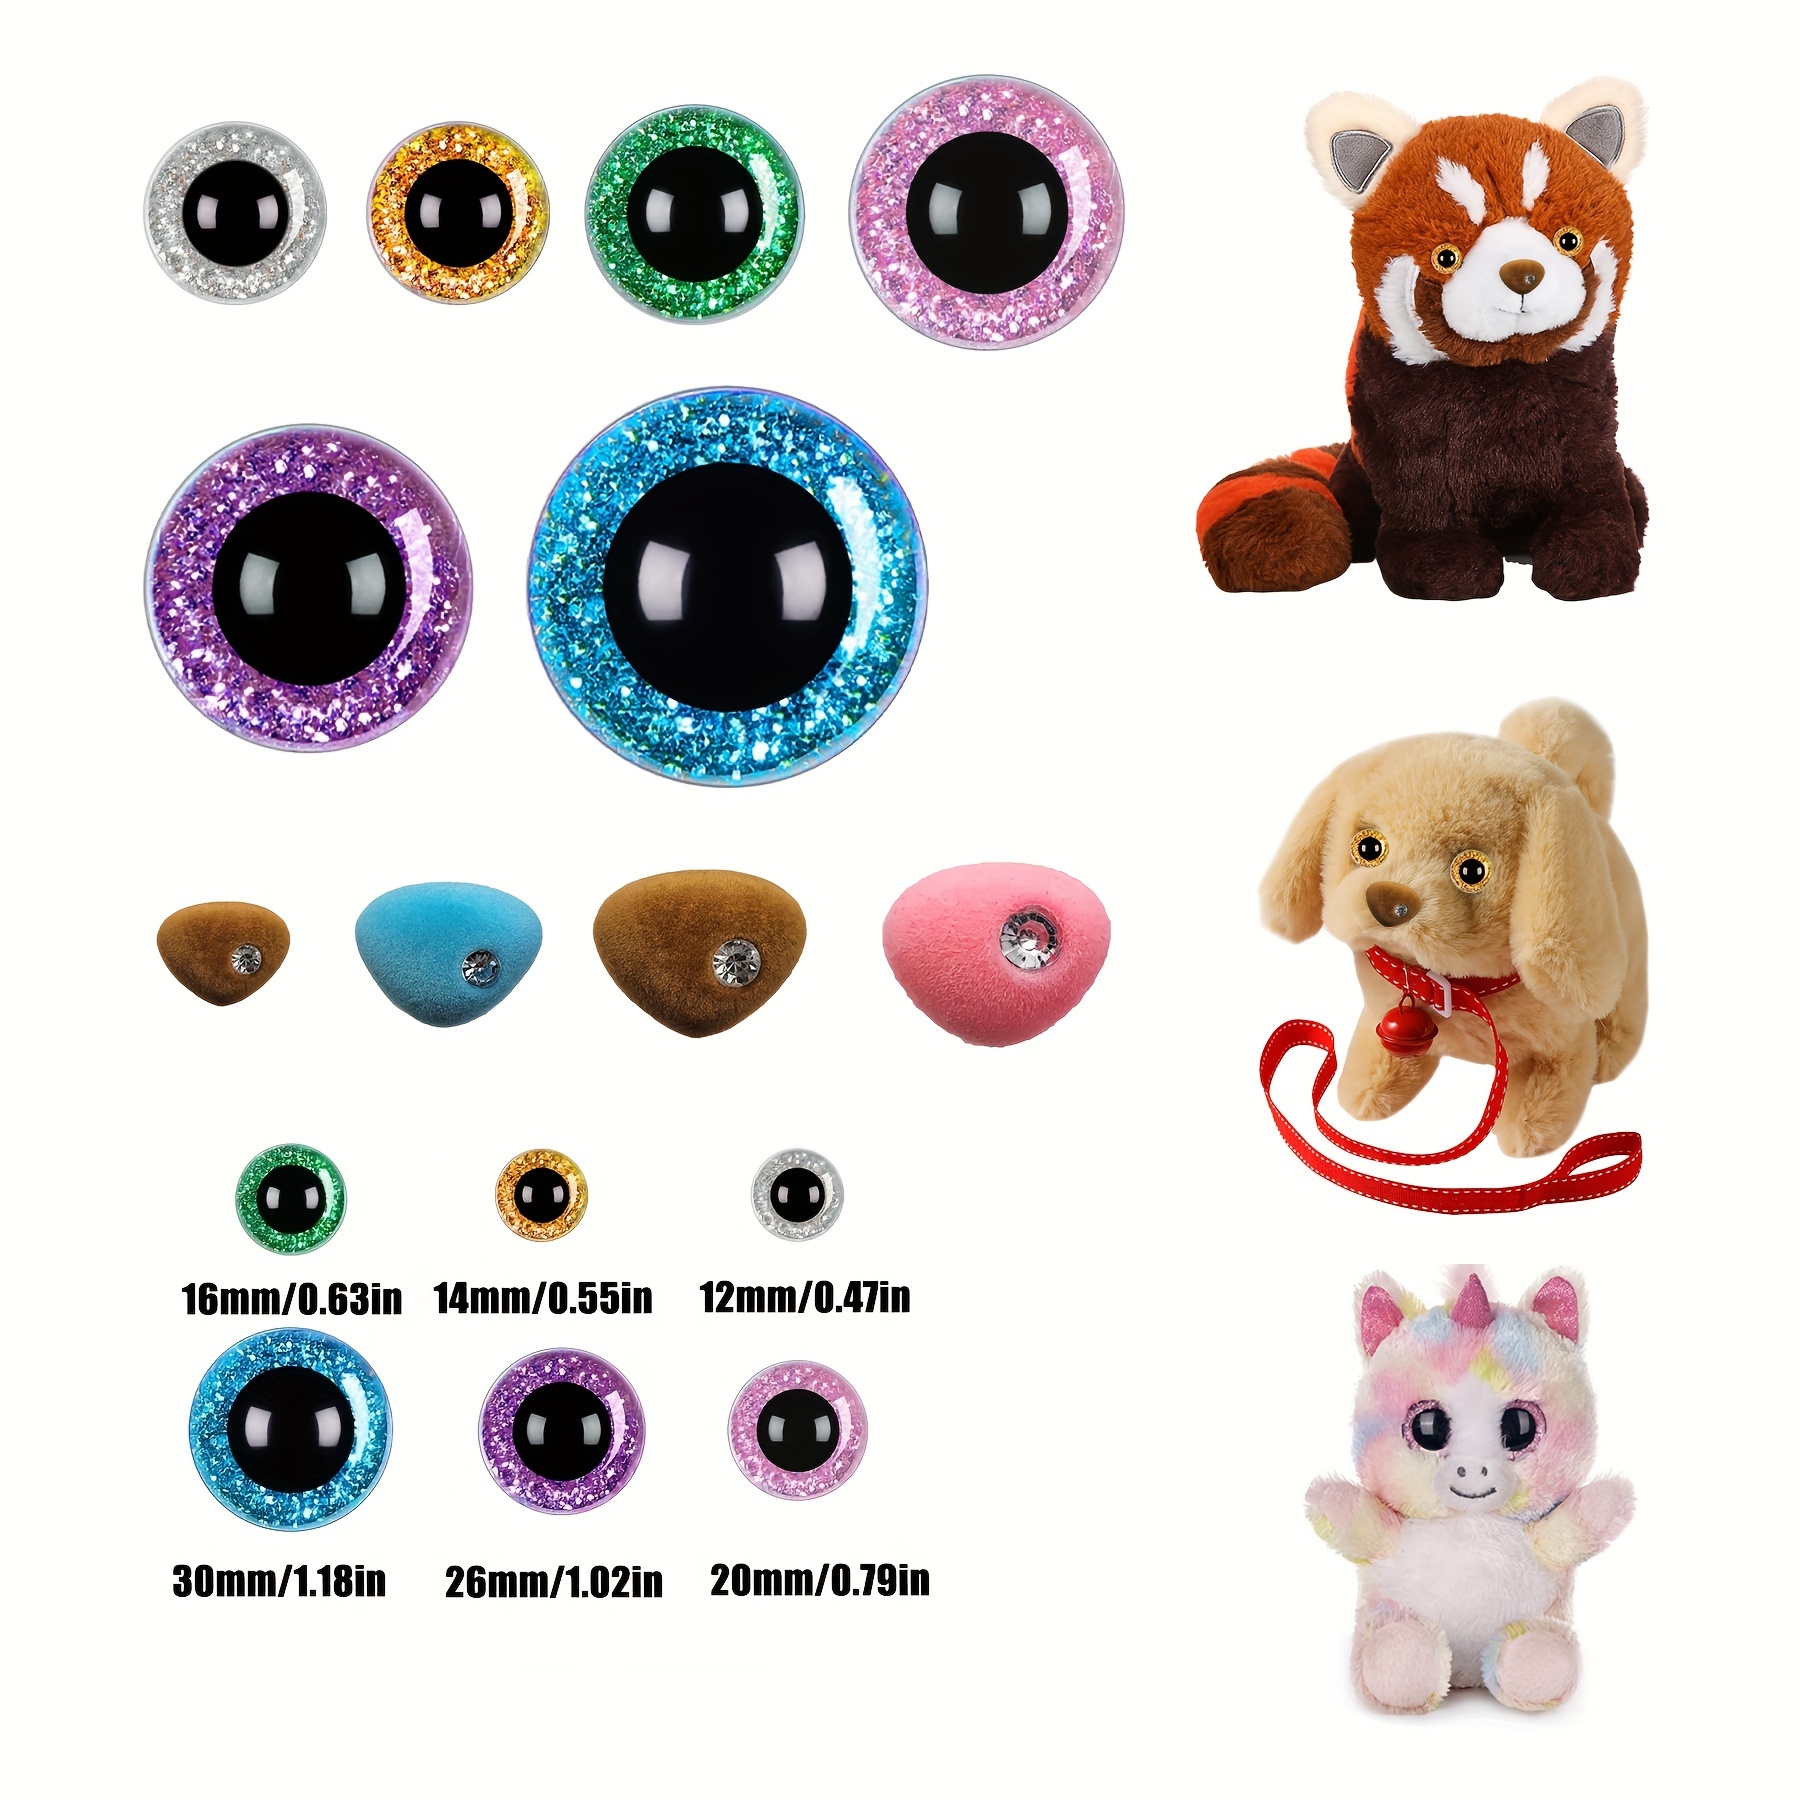 Crystal Cat Eyes Safety Eyes for Crochet Stuffed Animal Eyes